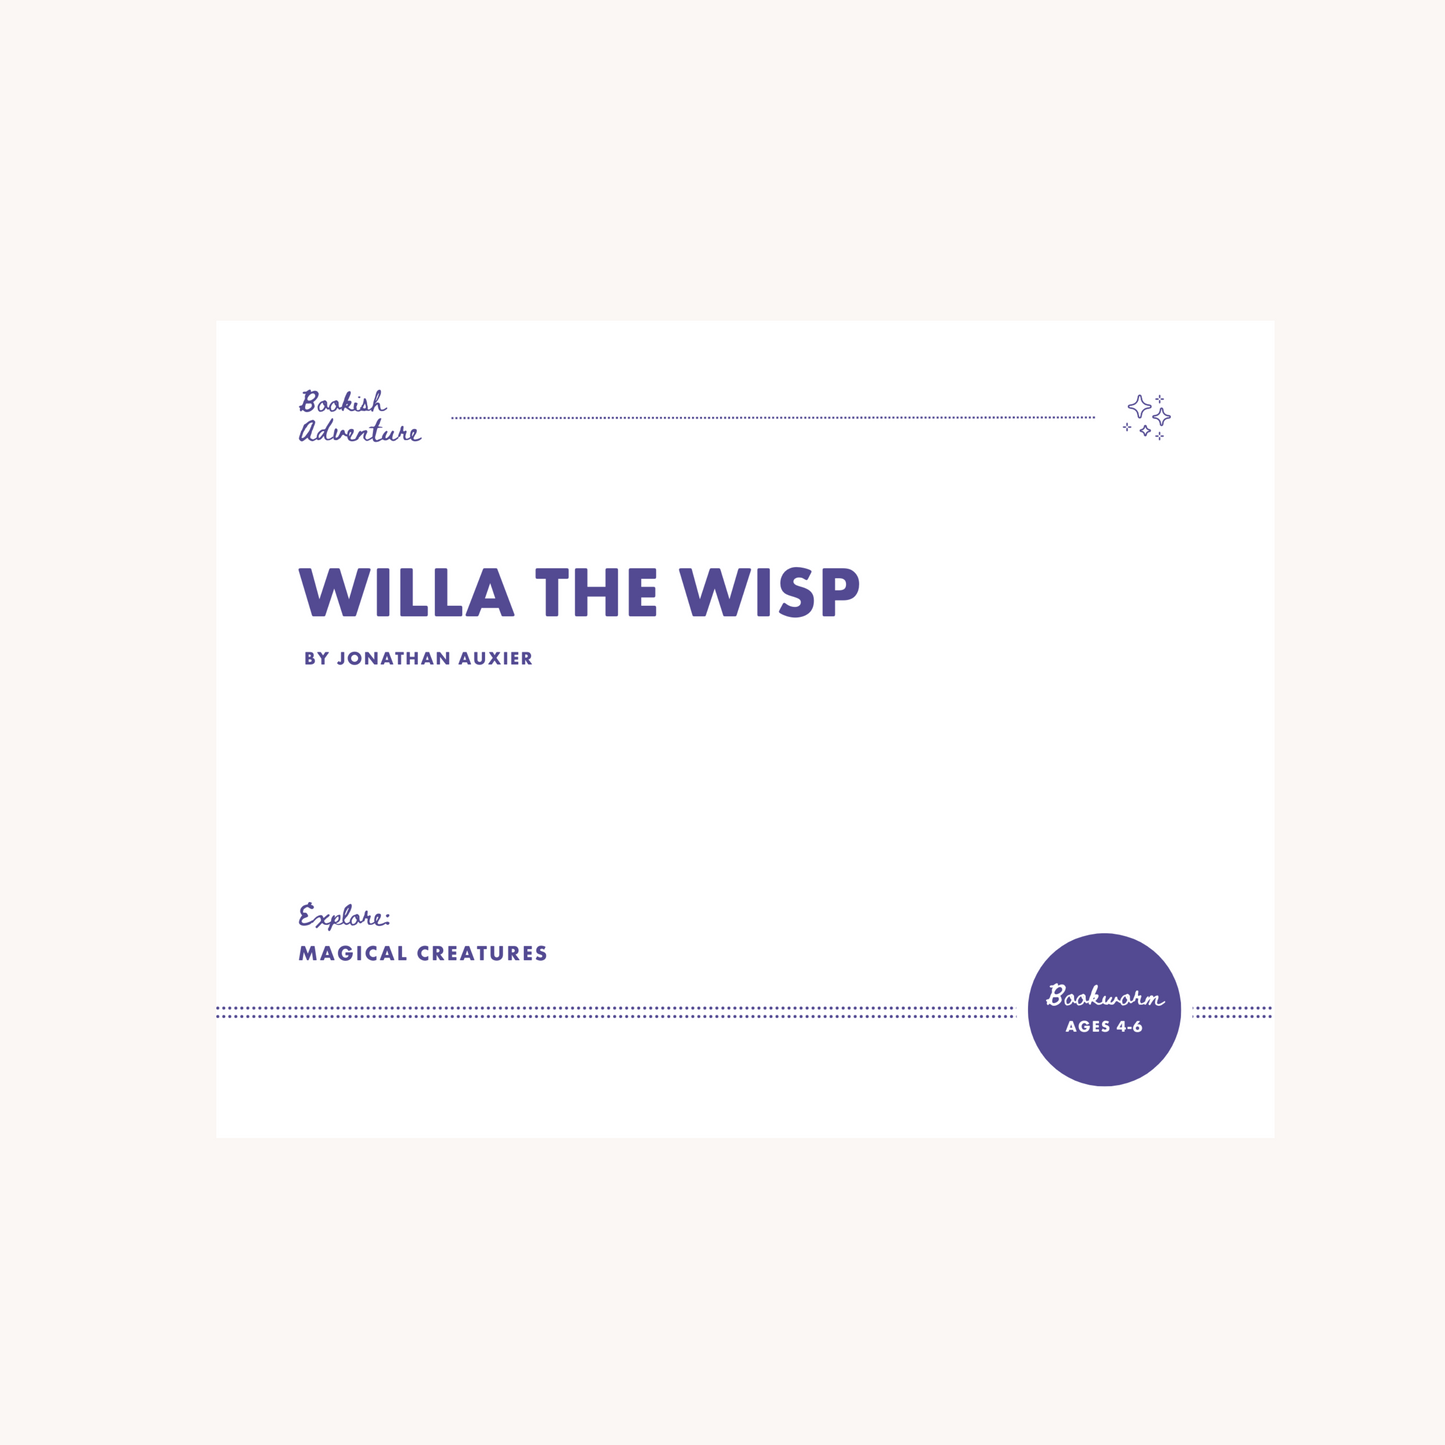 Willa the Wisp